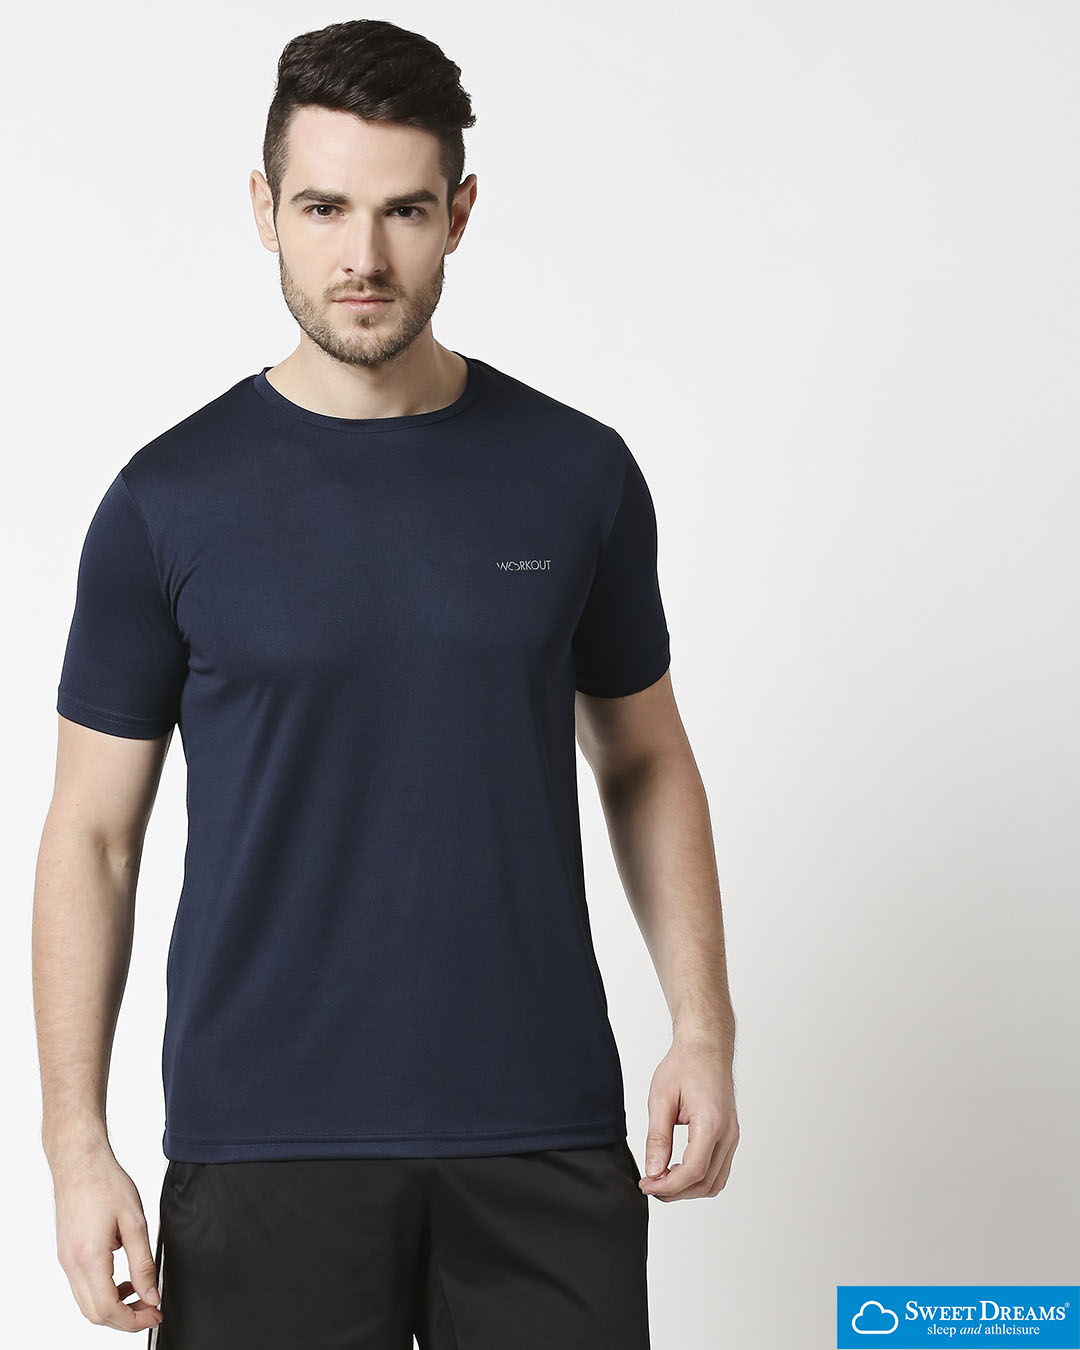 T-shirts for men I Men's Sports T-shirts at